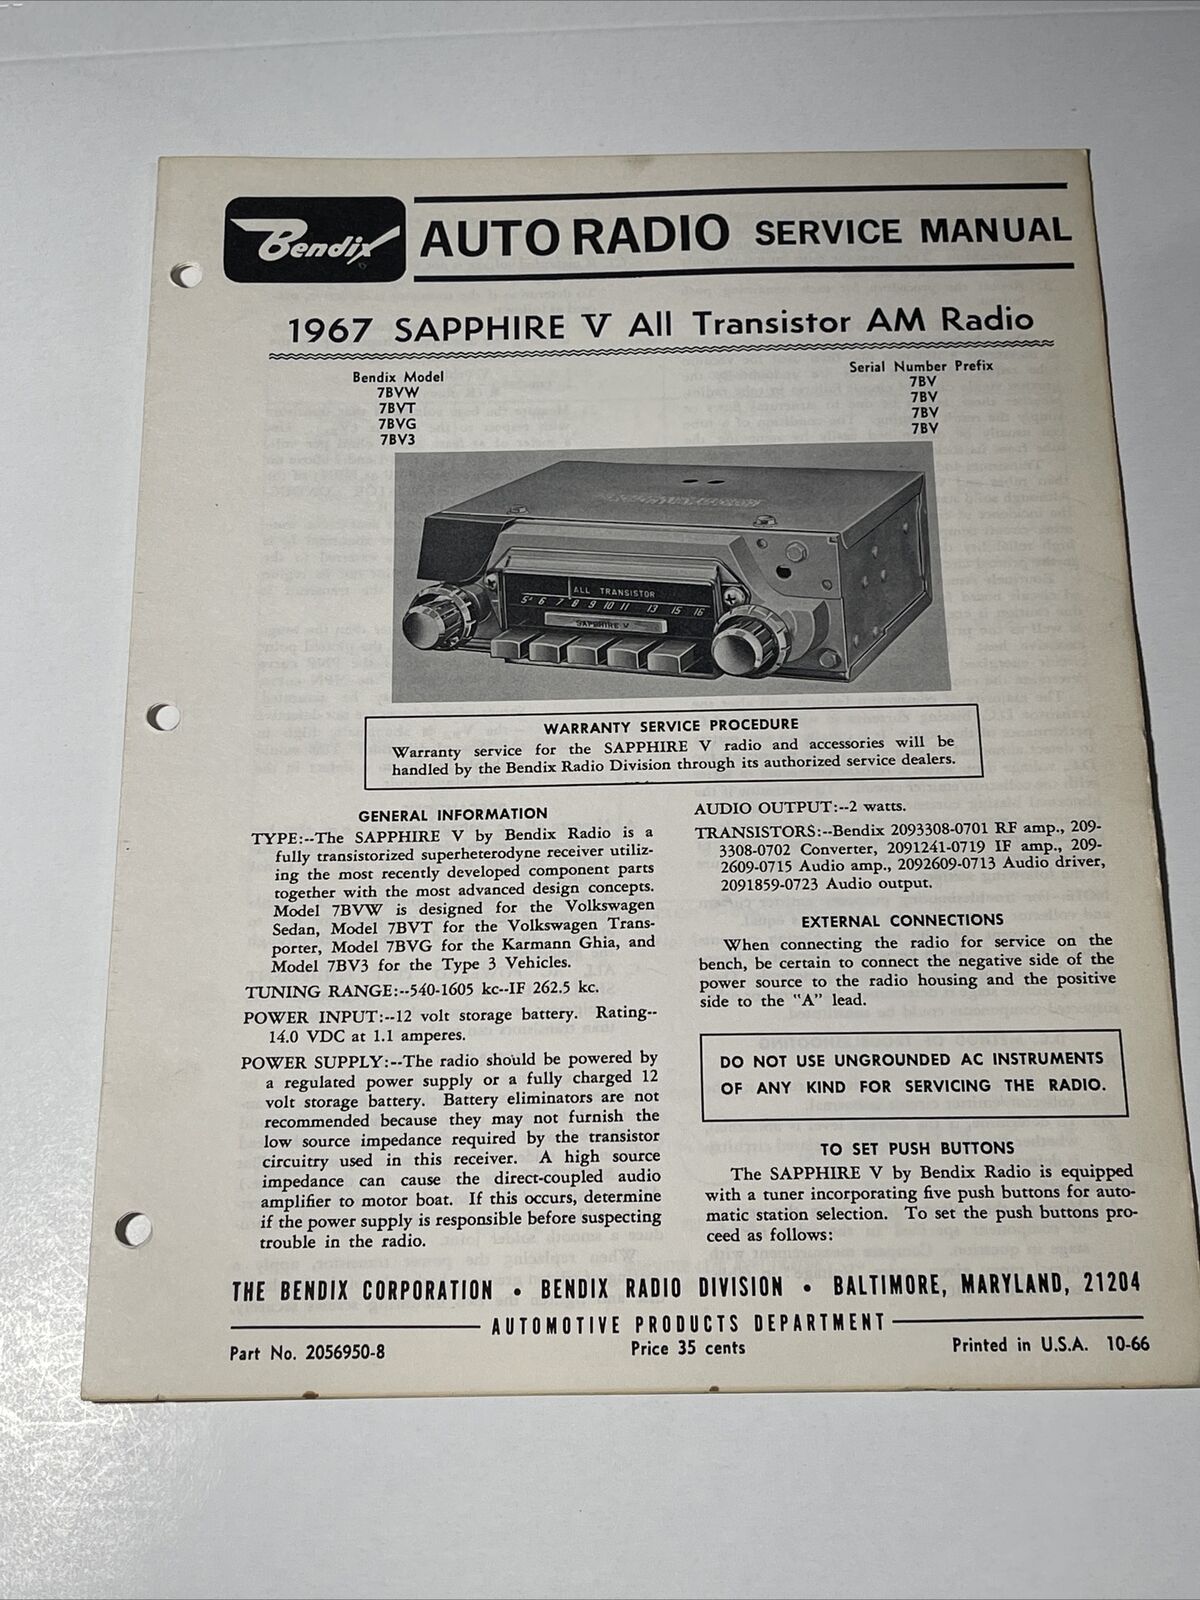 1967 Bendix Sapphire V Transistor AM Radio Service Manual